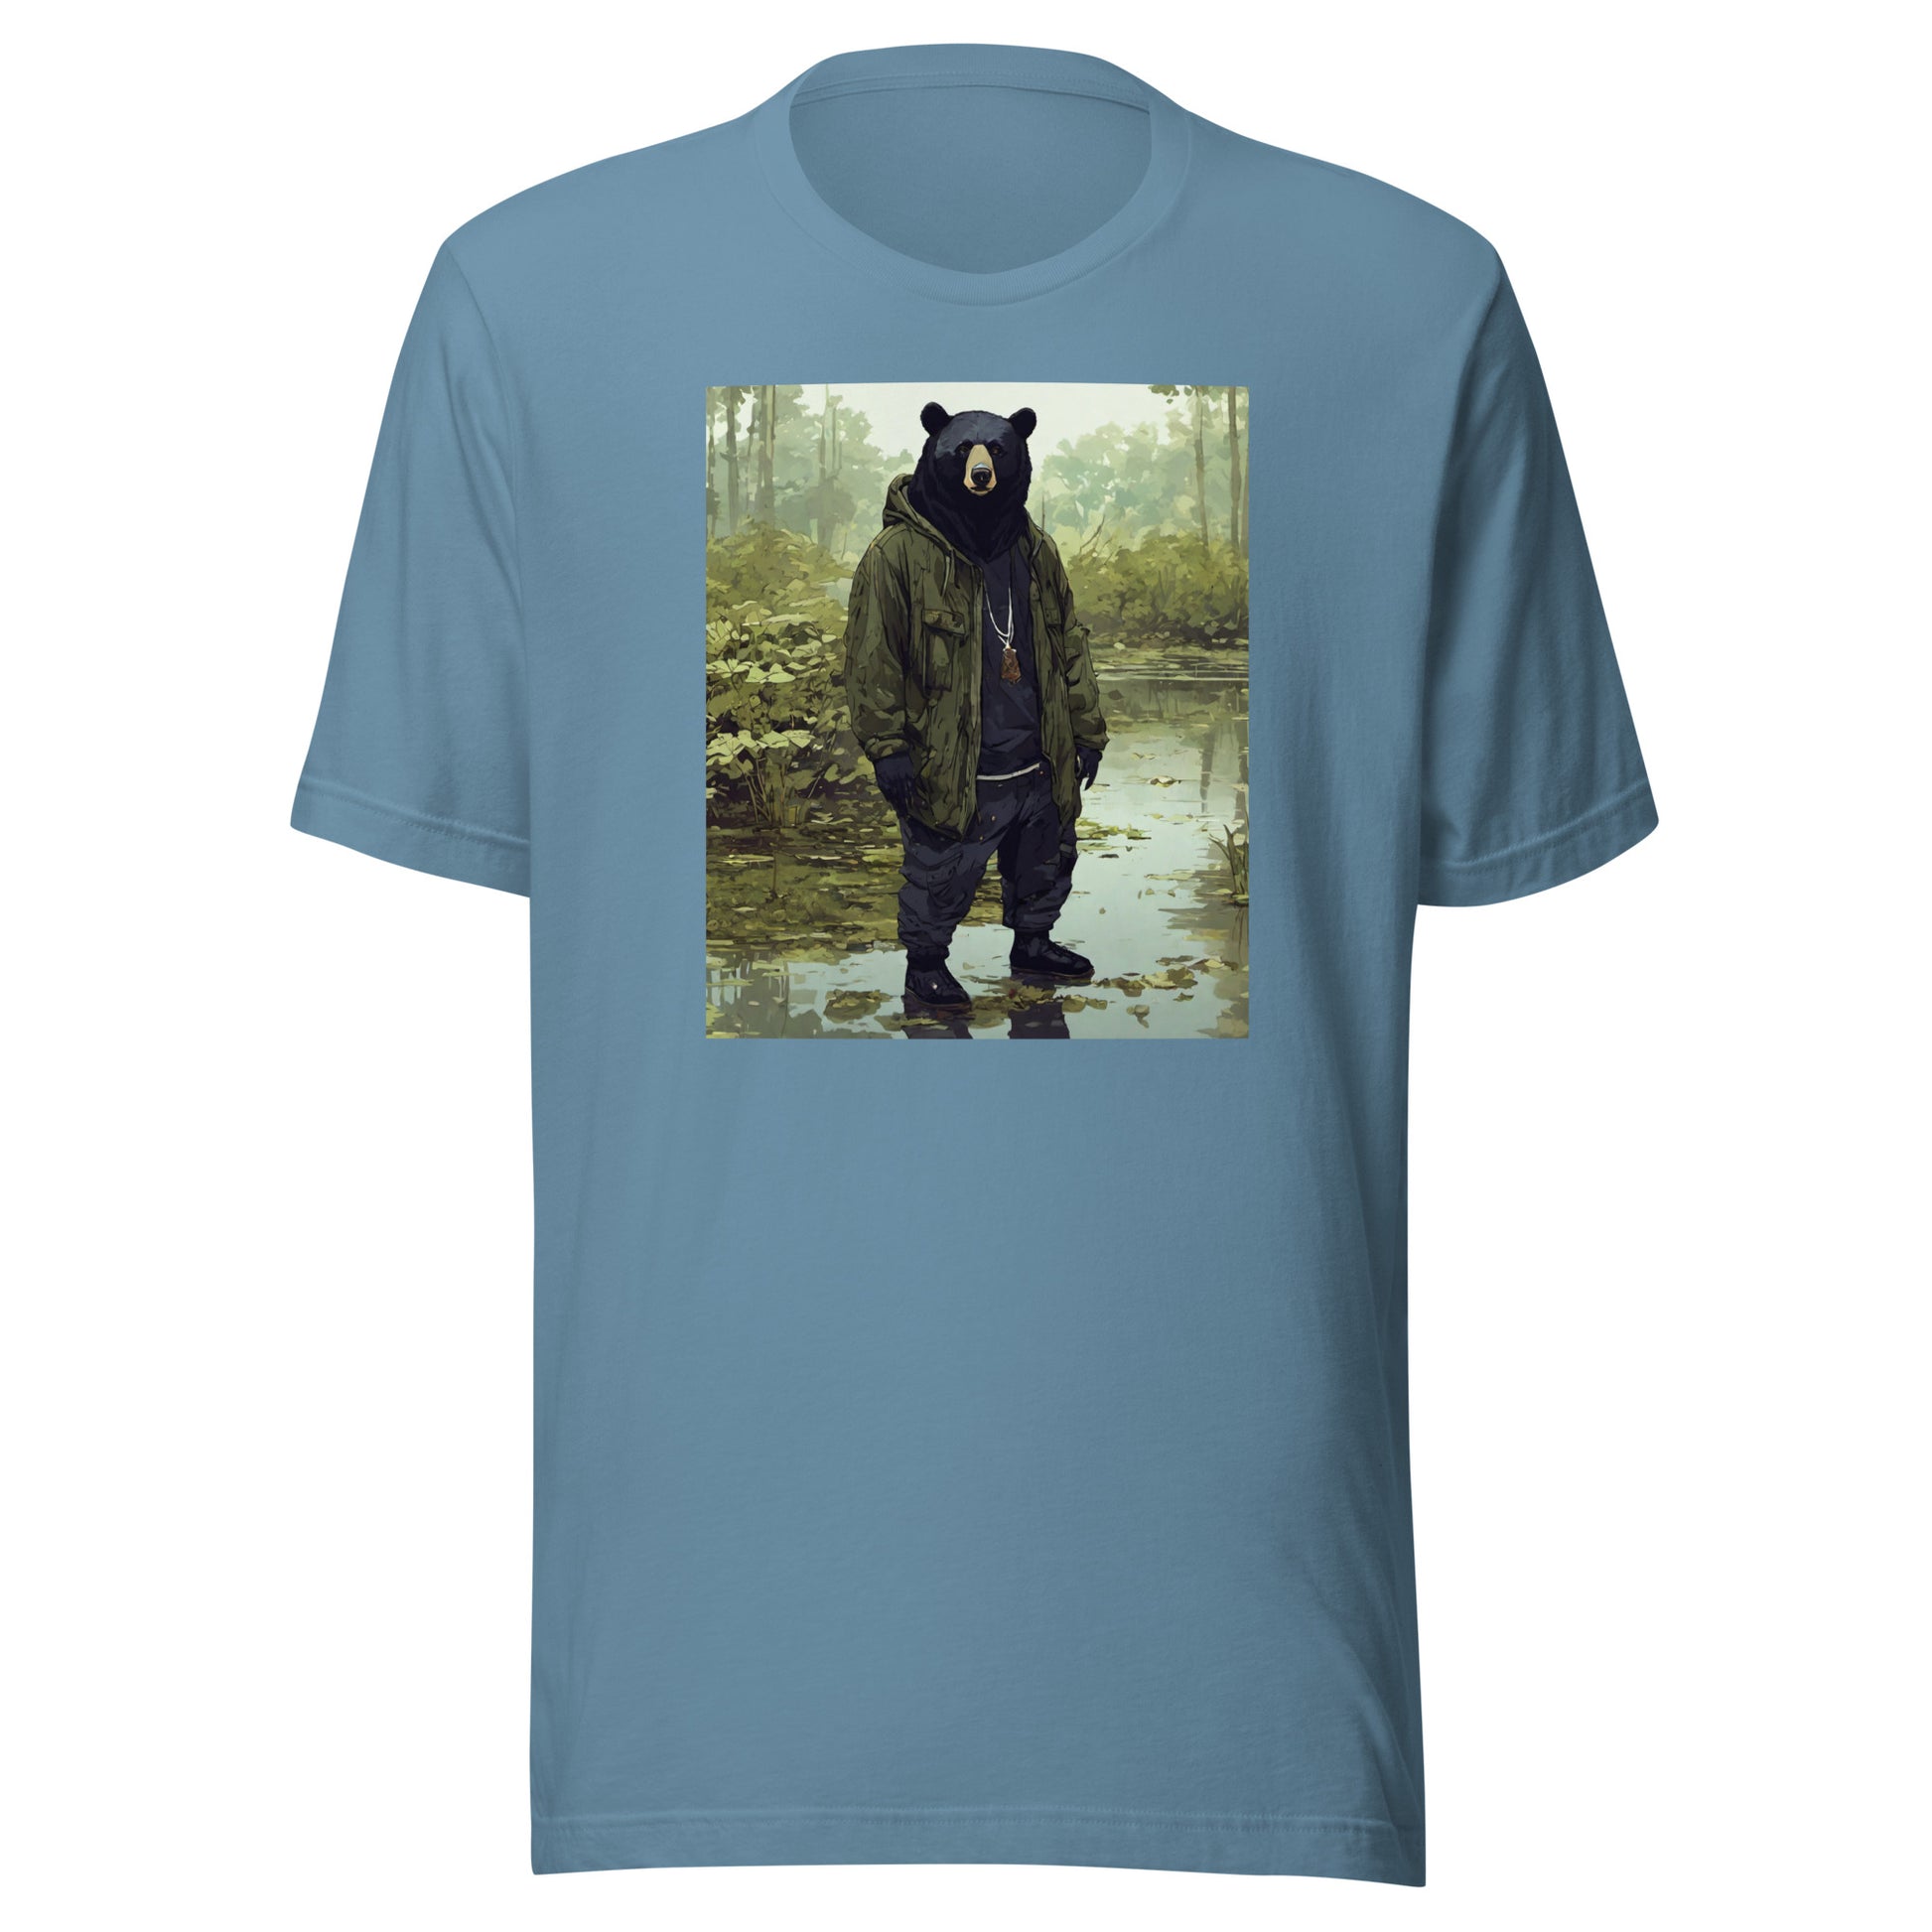 Stoic Black Bear Men's Graphic T-Shirt Steel Blue